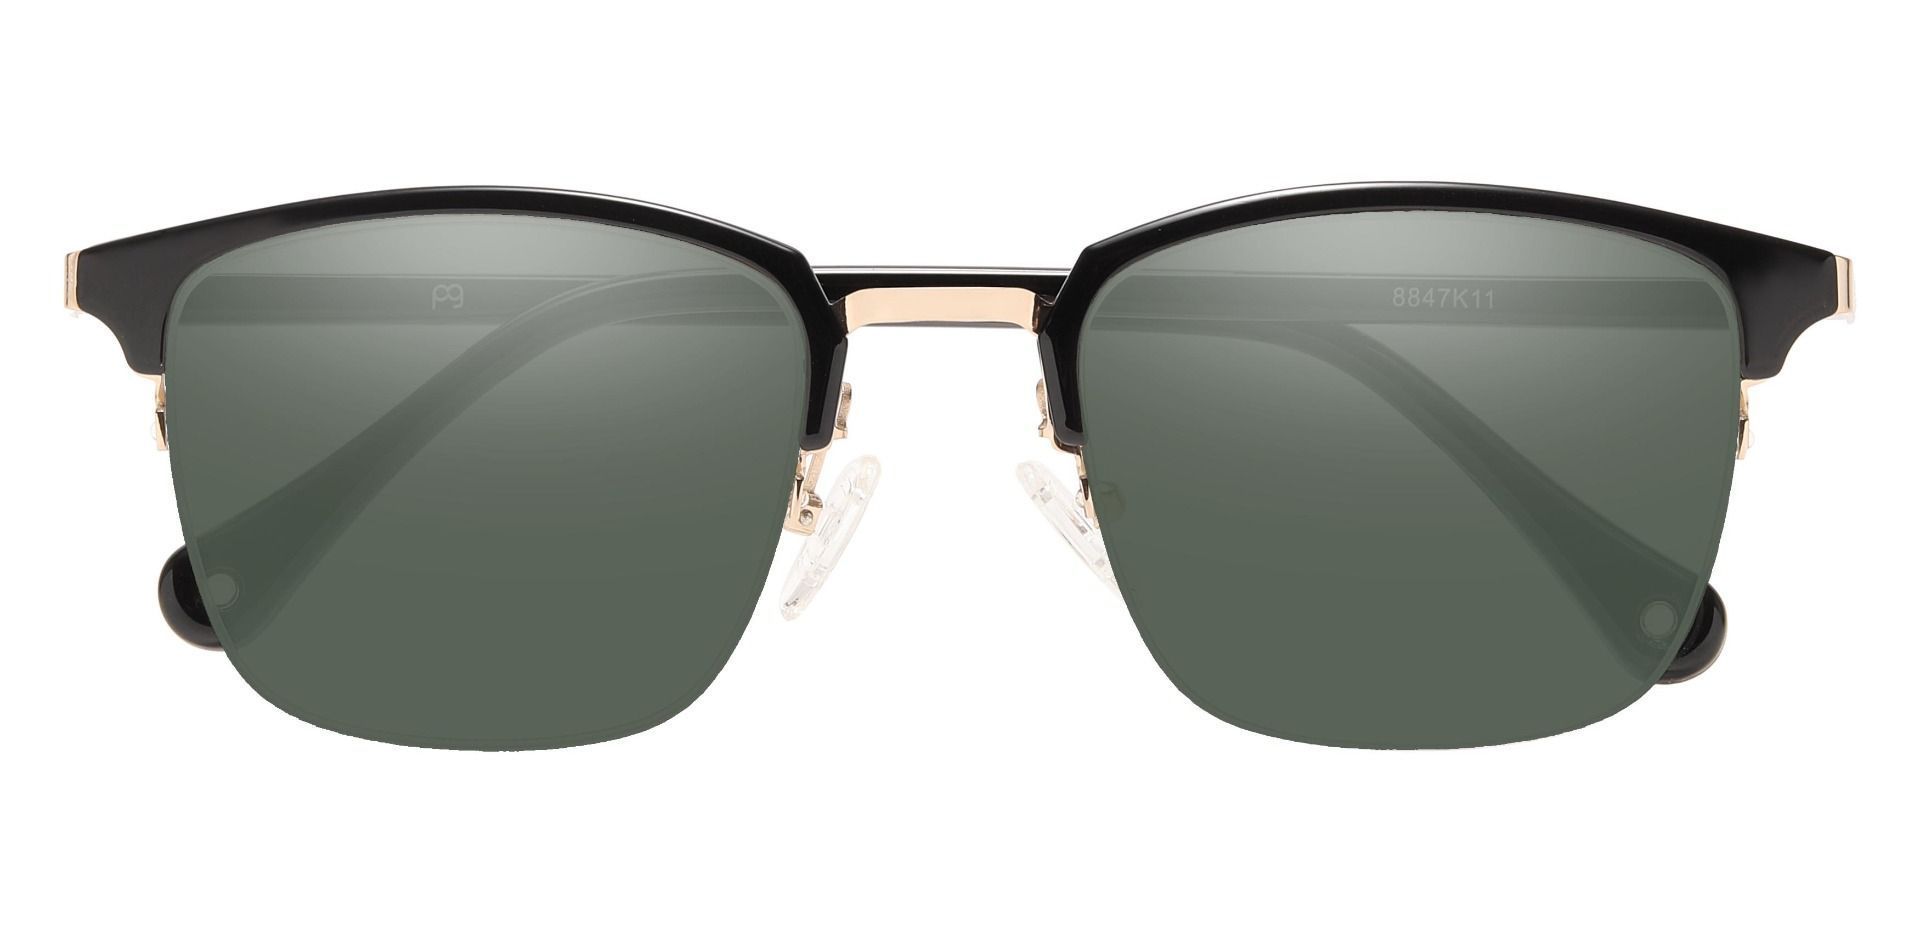 Atlantic Browline Non-Rx Sunglasses - Black Frame With Green Lenses